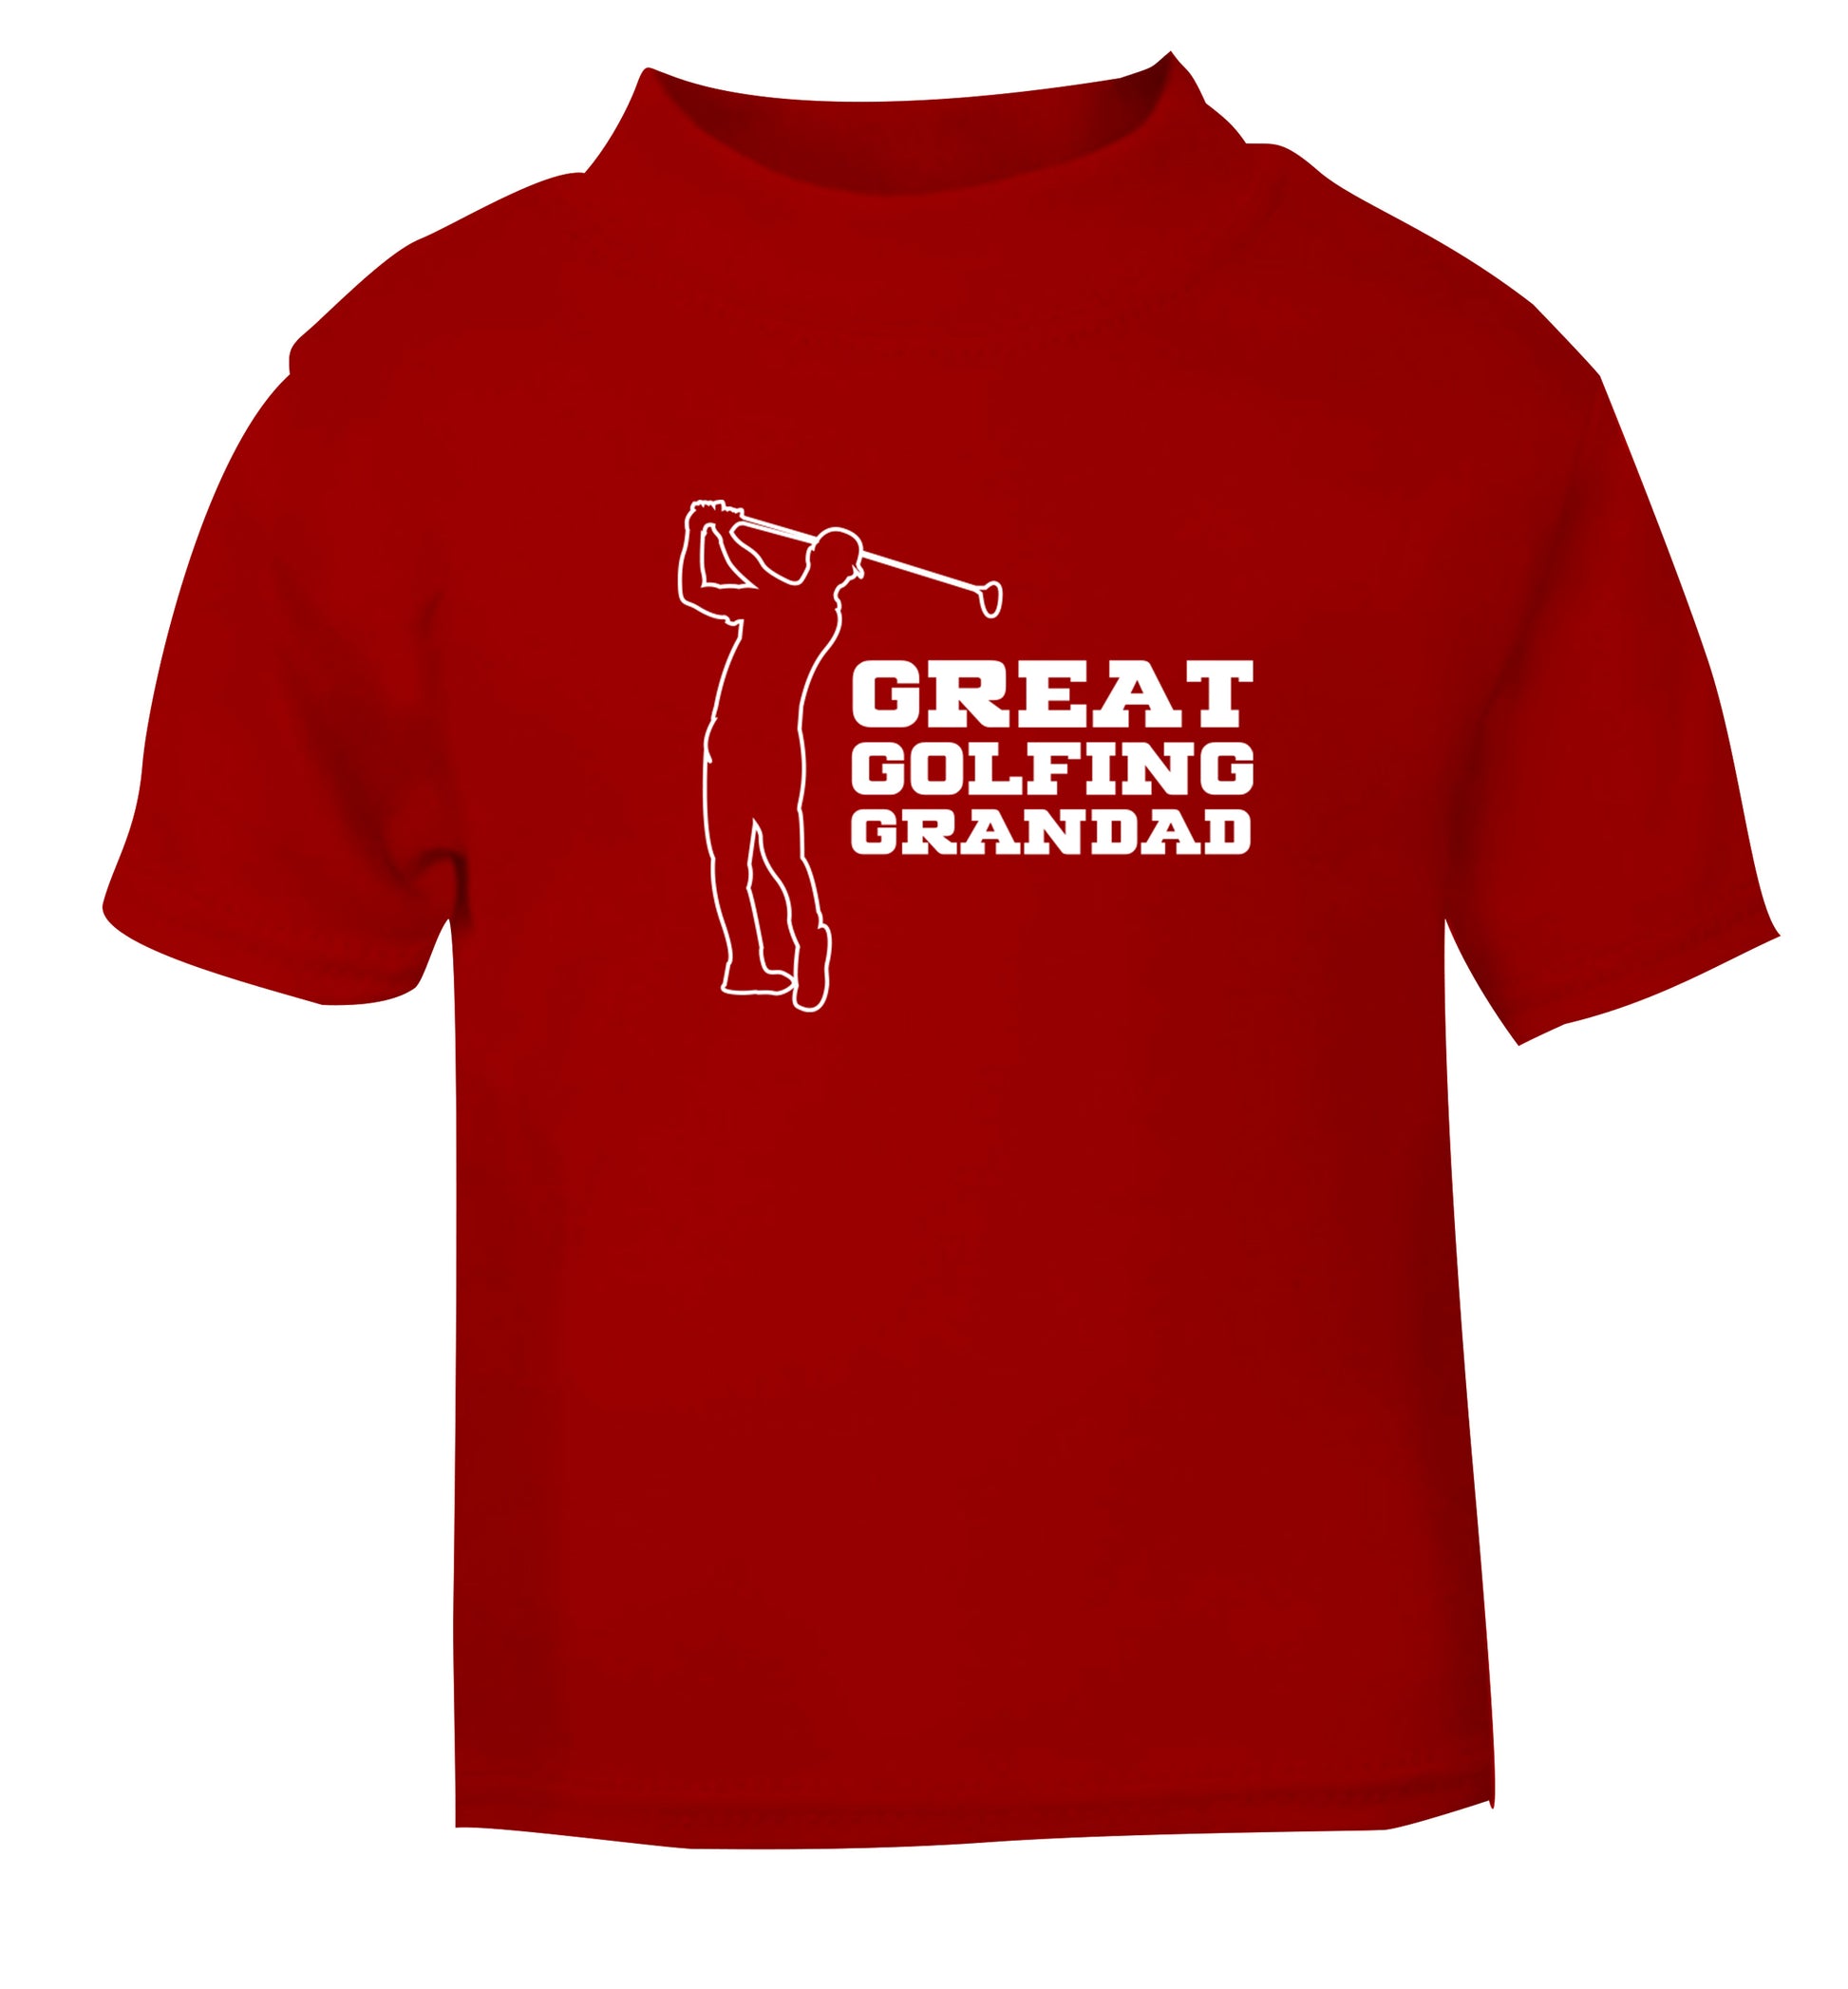 Great Golfing Grandad red Baby Toddler Tshirt 2 Years